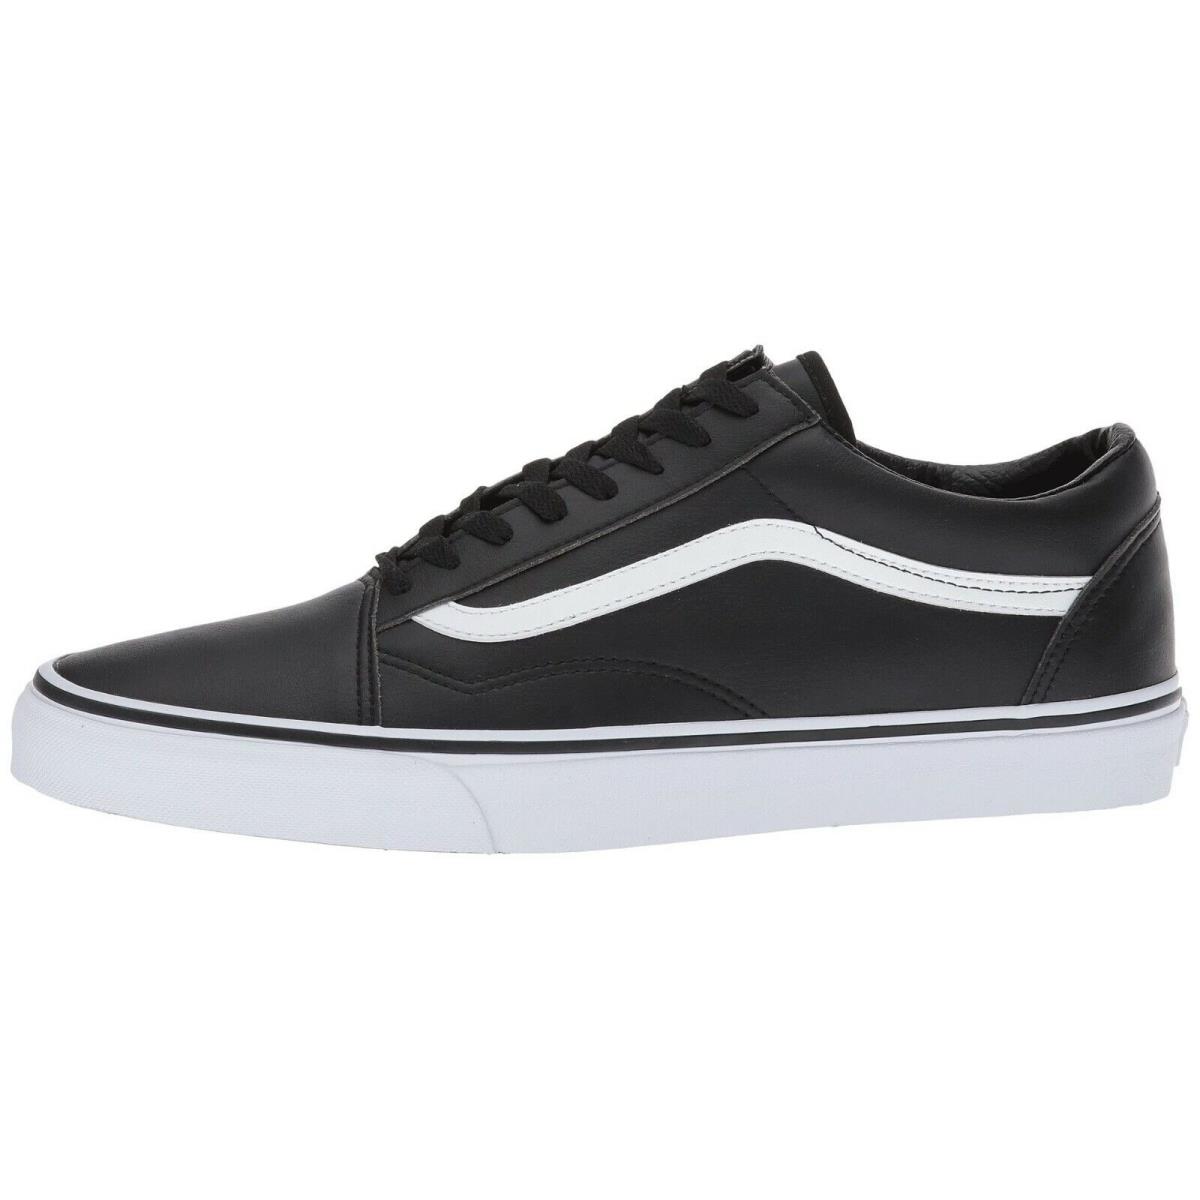 Vans shoes Old Skool ComfyCush - Black/ White 1